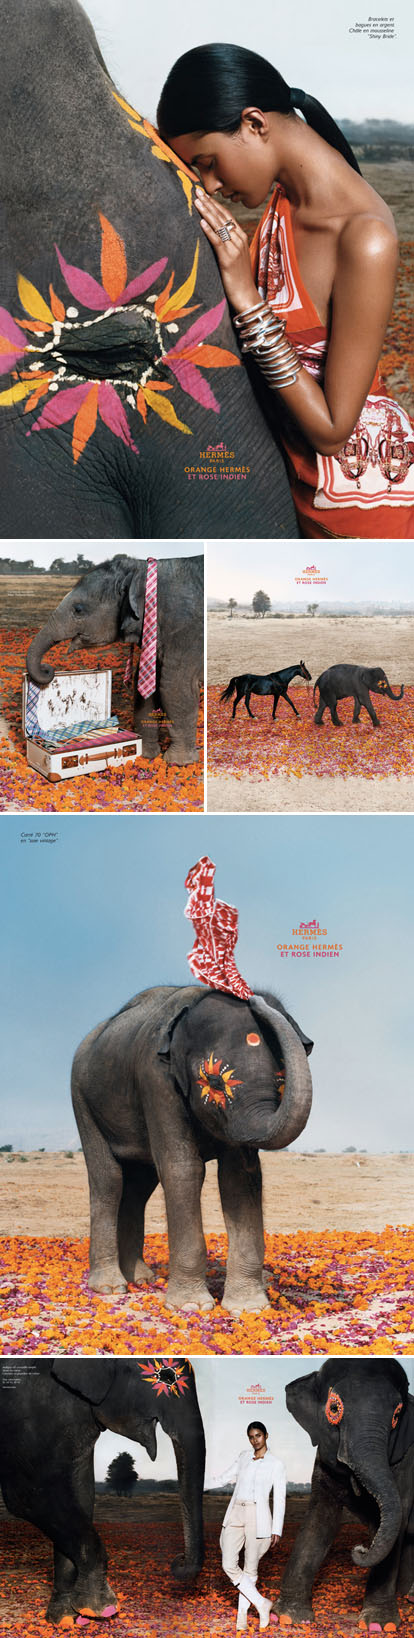 Hermes Orange, India Pink ad campaign